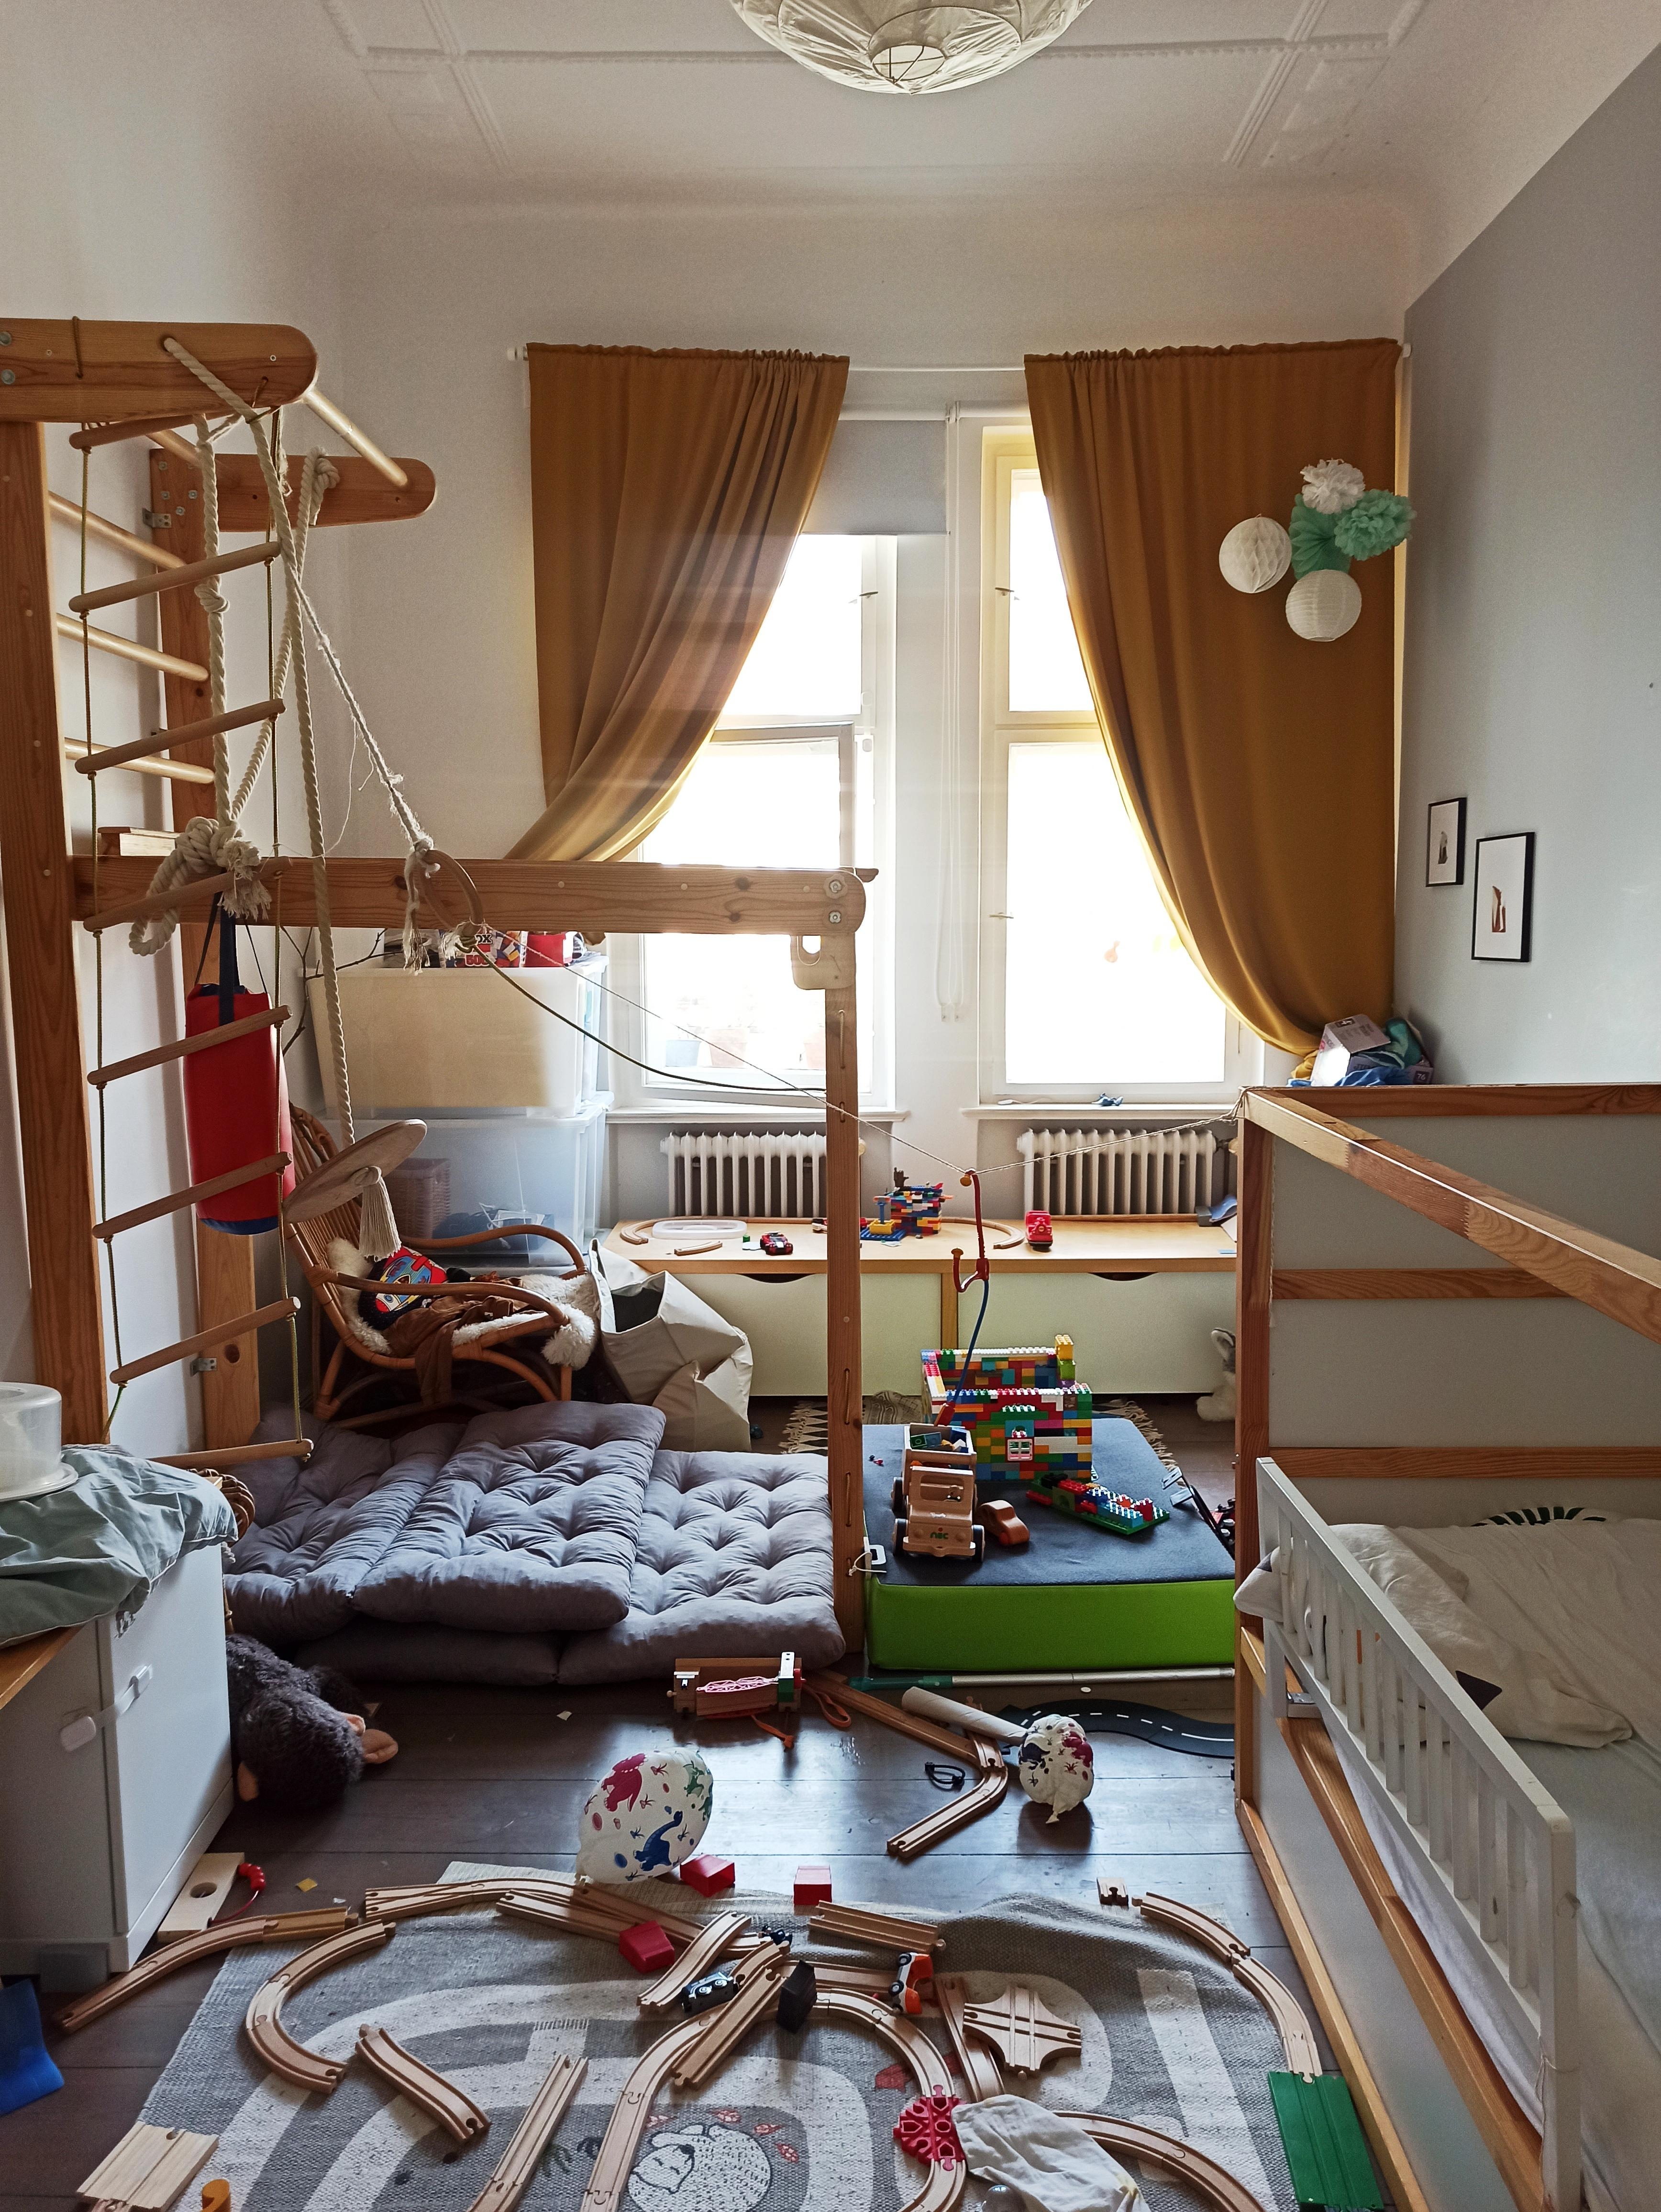 Kinderzimmer-Gewusel #kinderzimmer #altbau